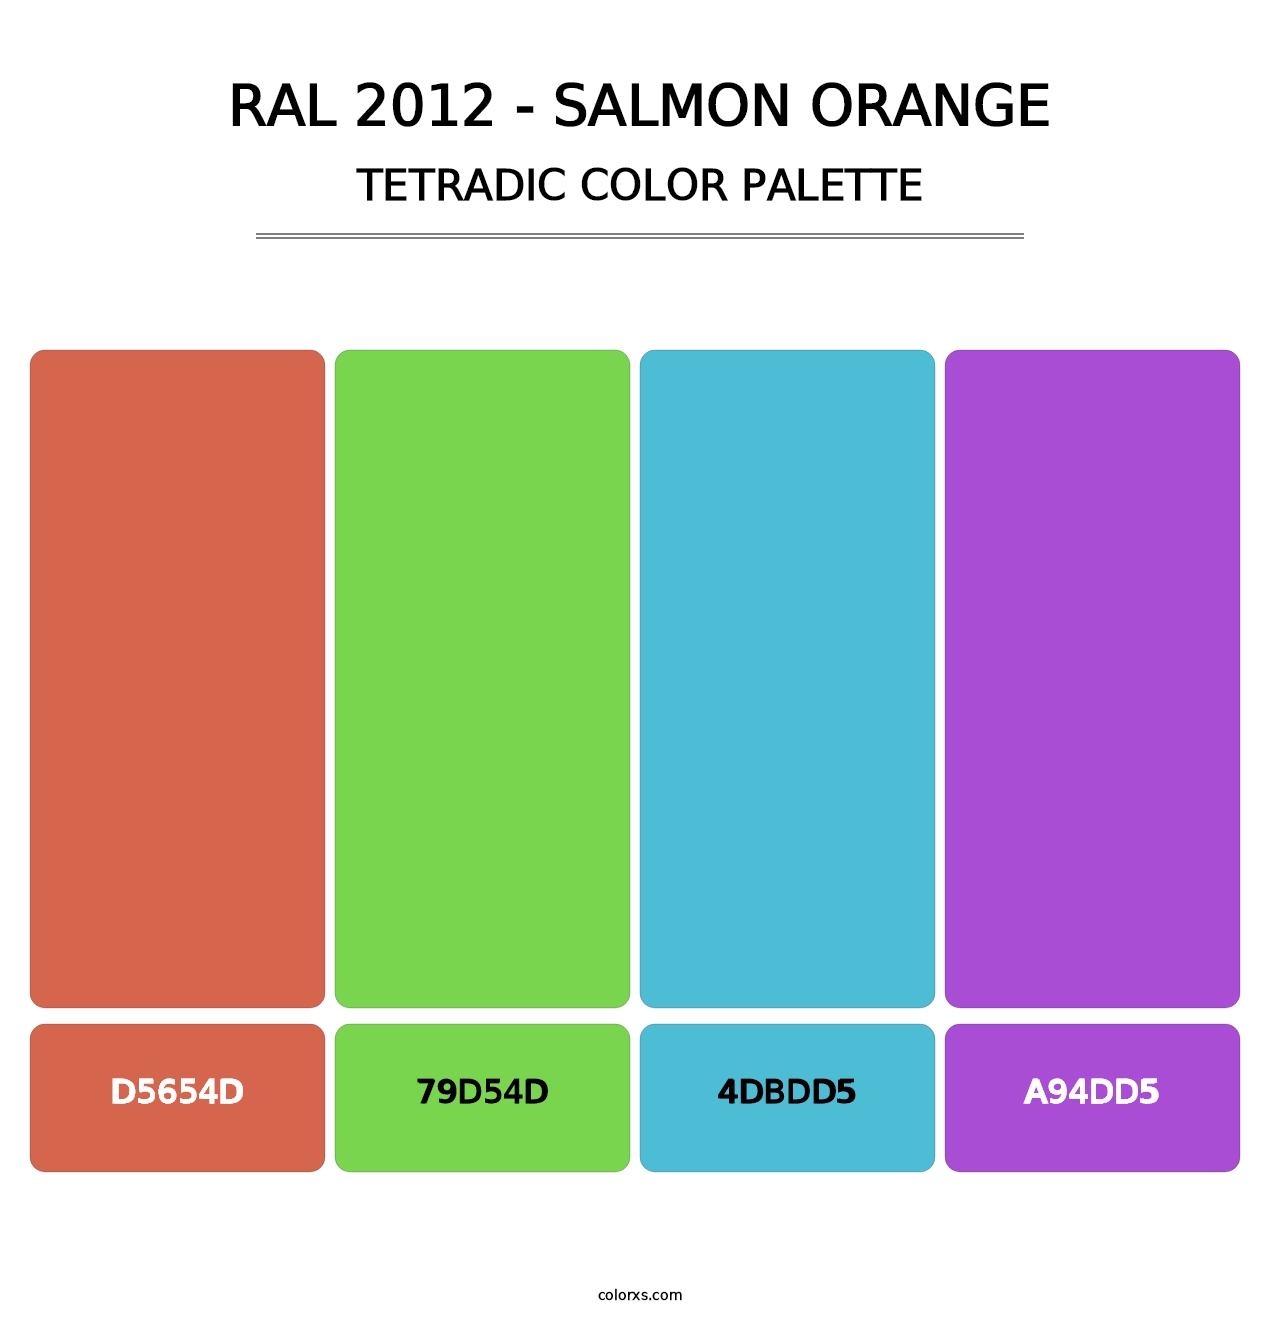 RAL 2012 - Salmon Orange - Tetradic Color Palette